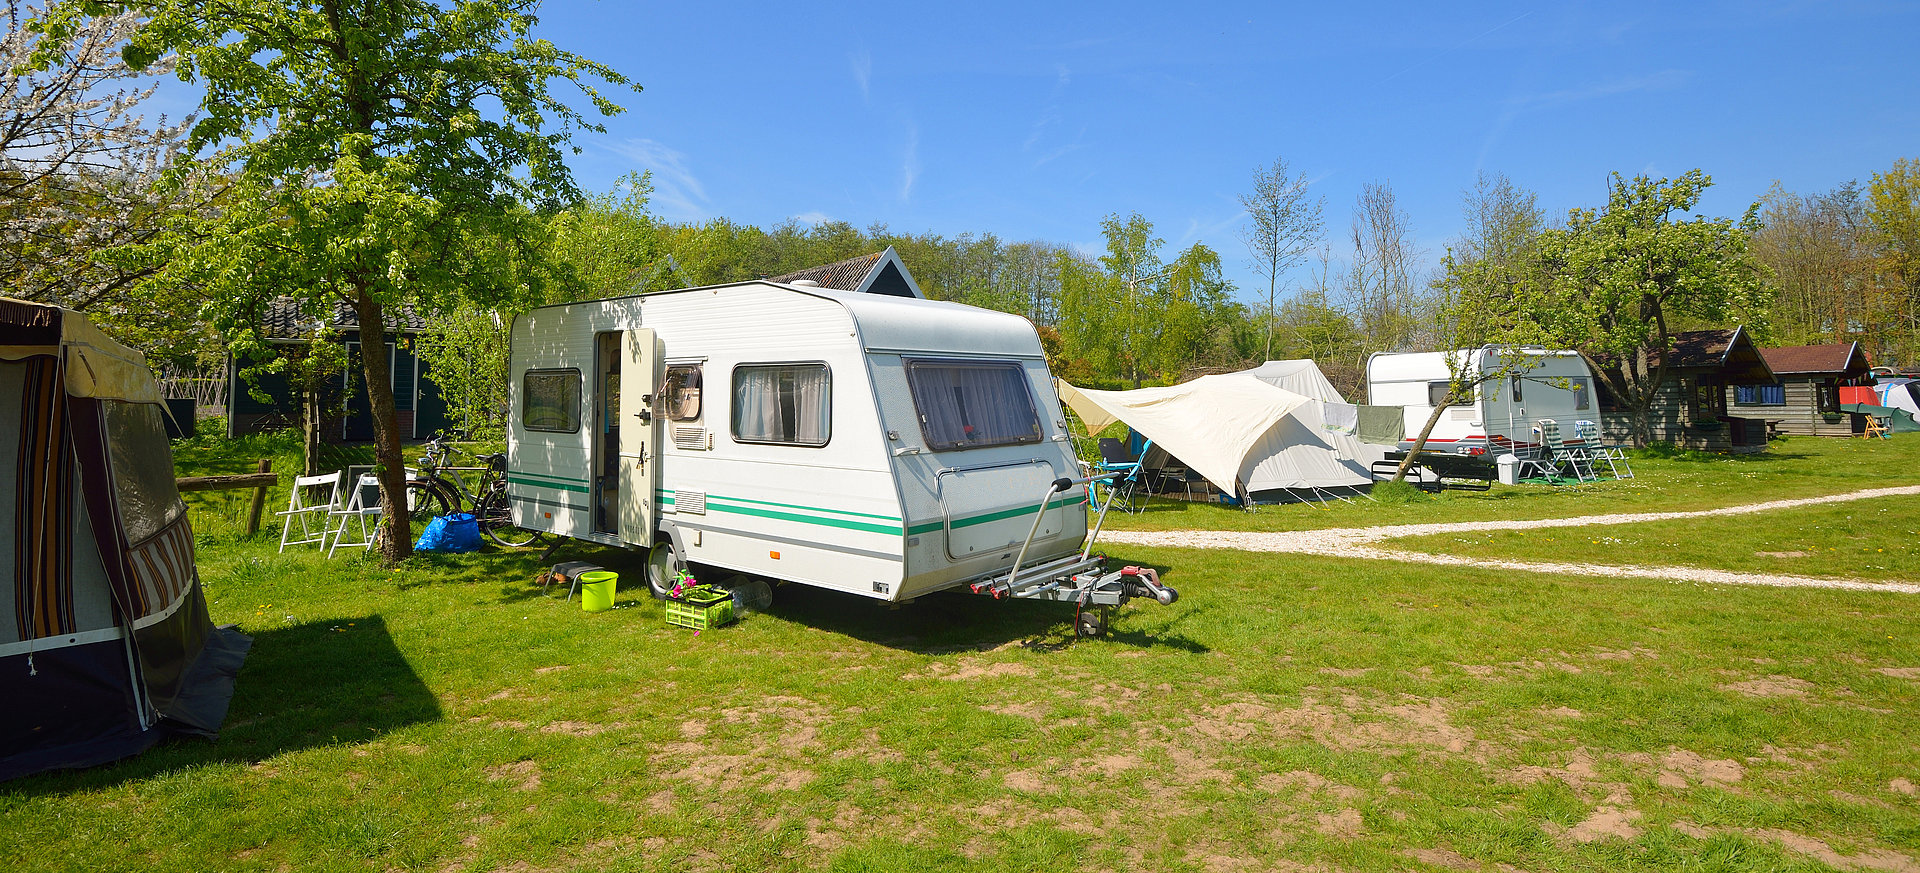 Campingplatz EuroParcs Molengroet